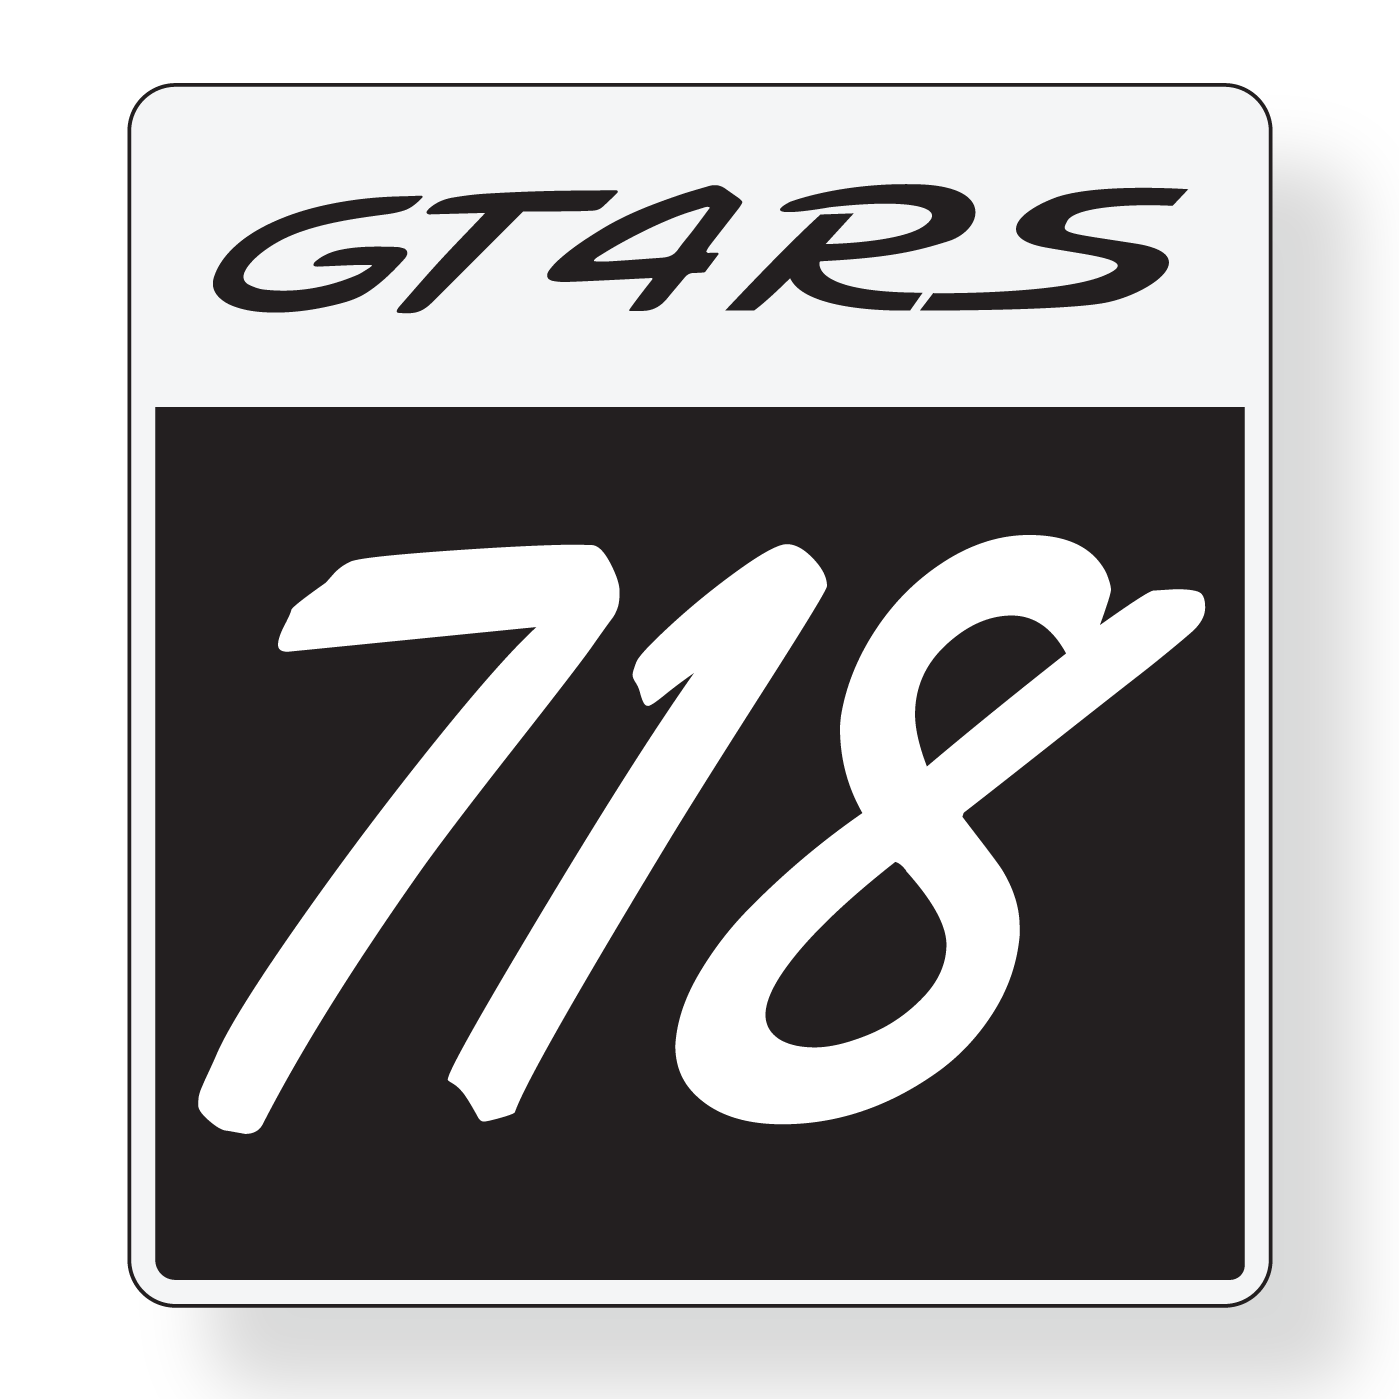 GT4RS Racing Numbers